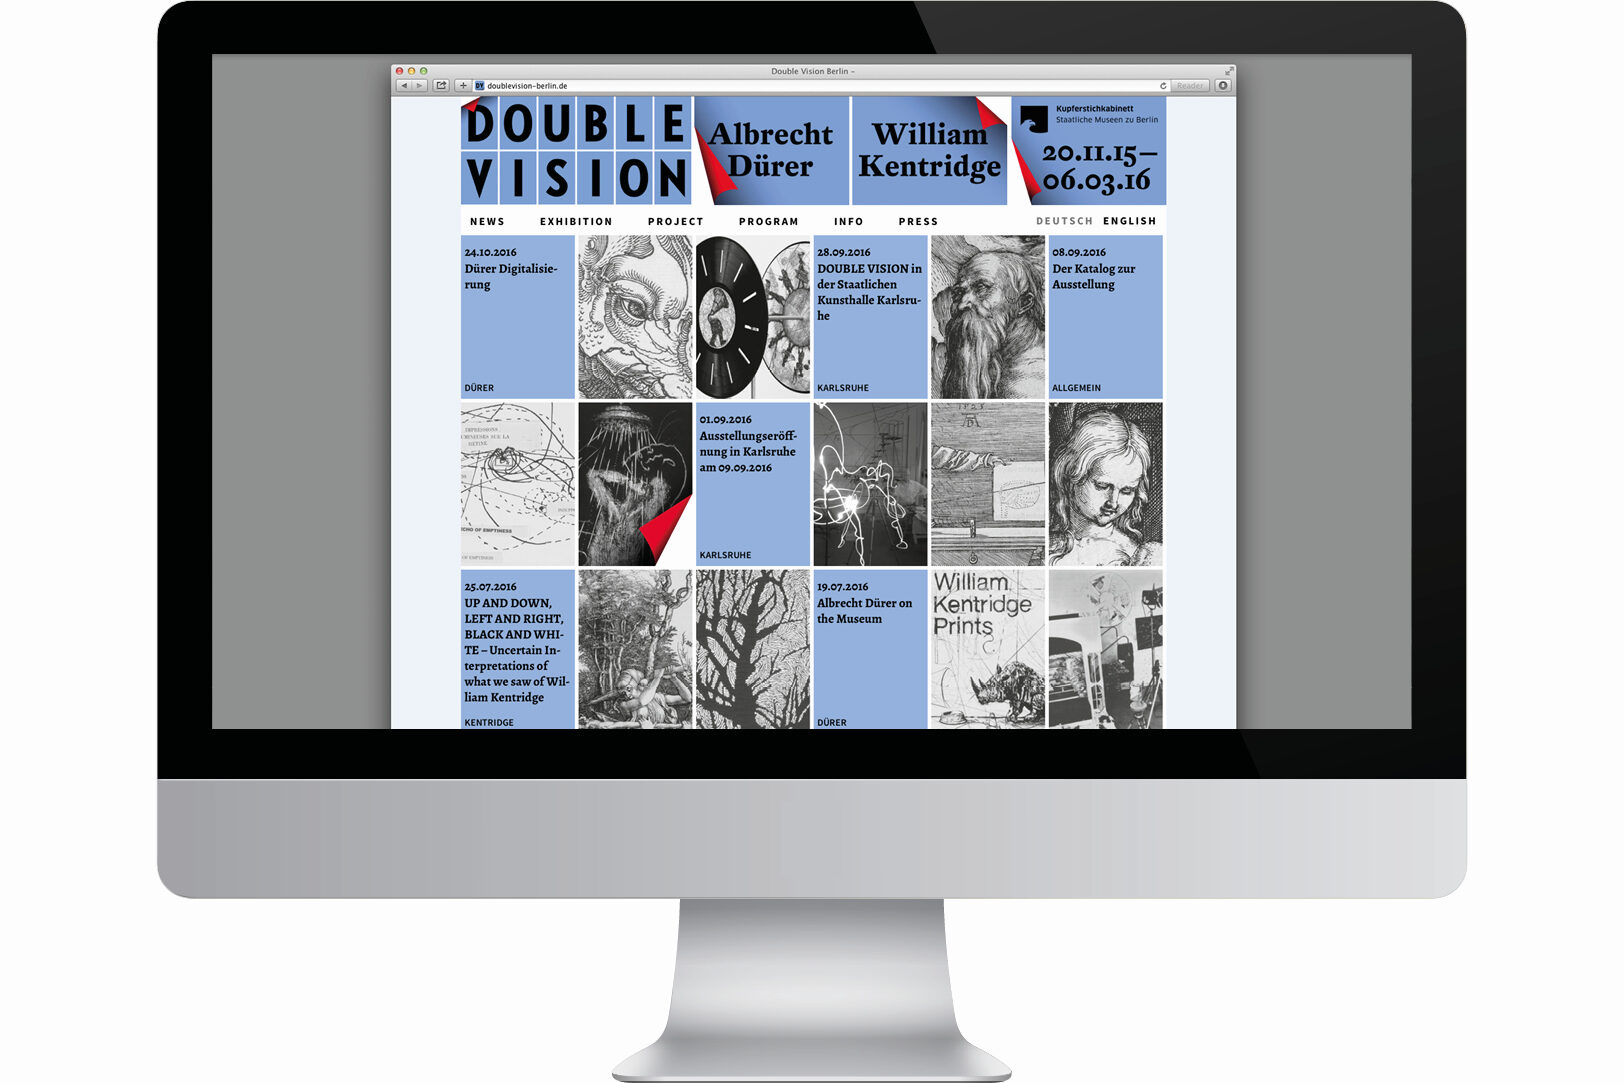 https://e-o-t.de/wordpress/wp-content/uploads/2015/11/Eot-Double-Vision-Web-2.jpg